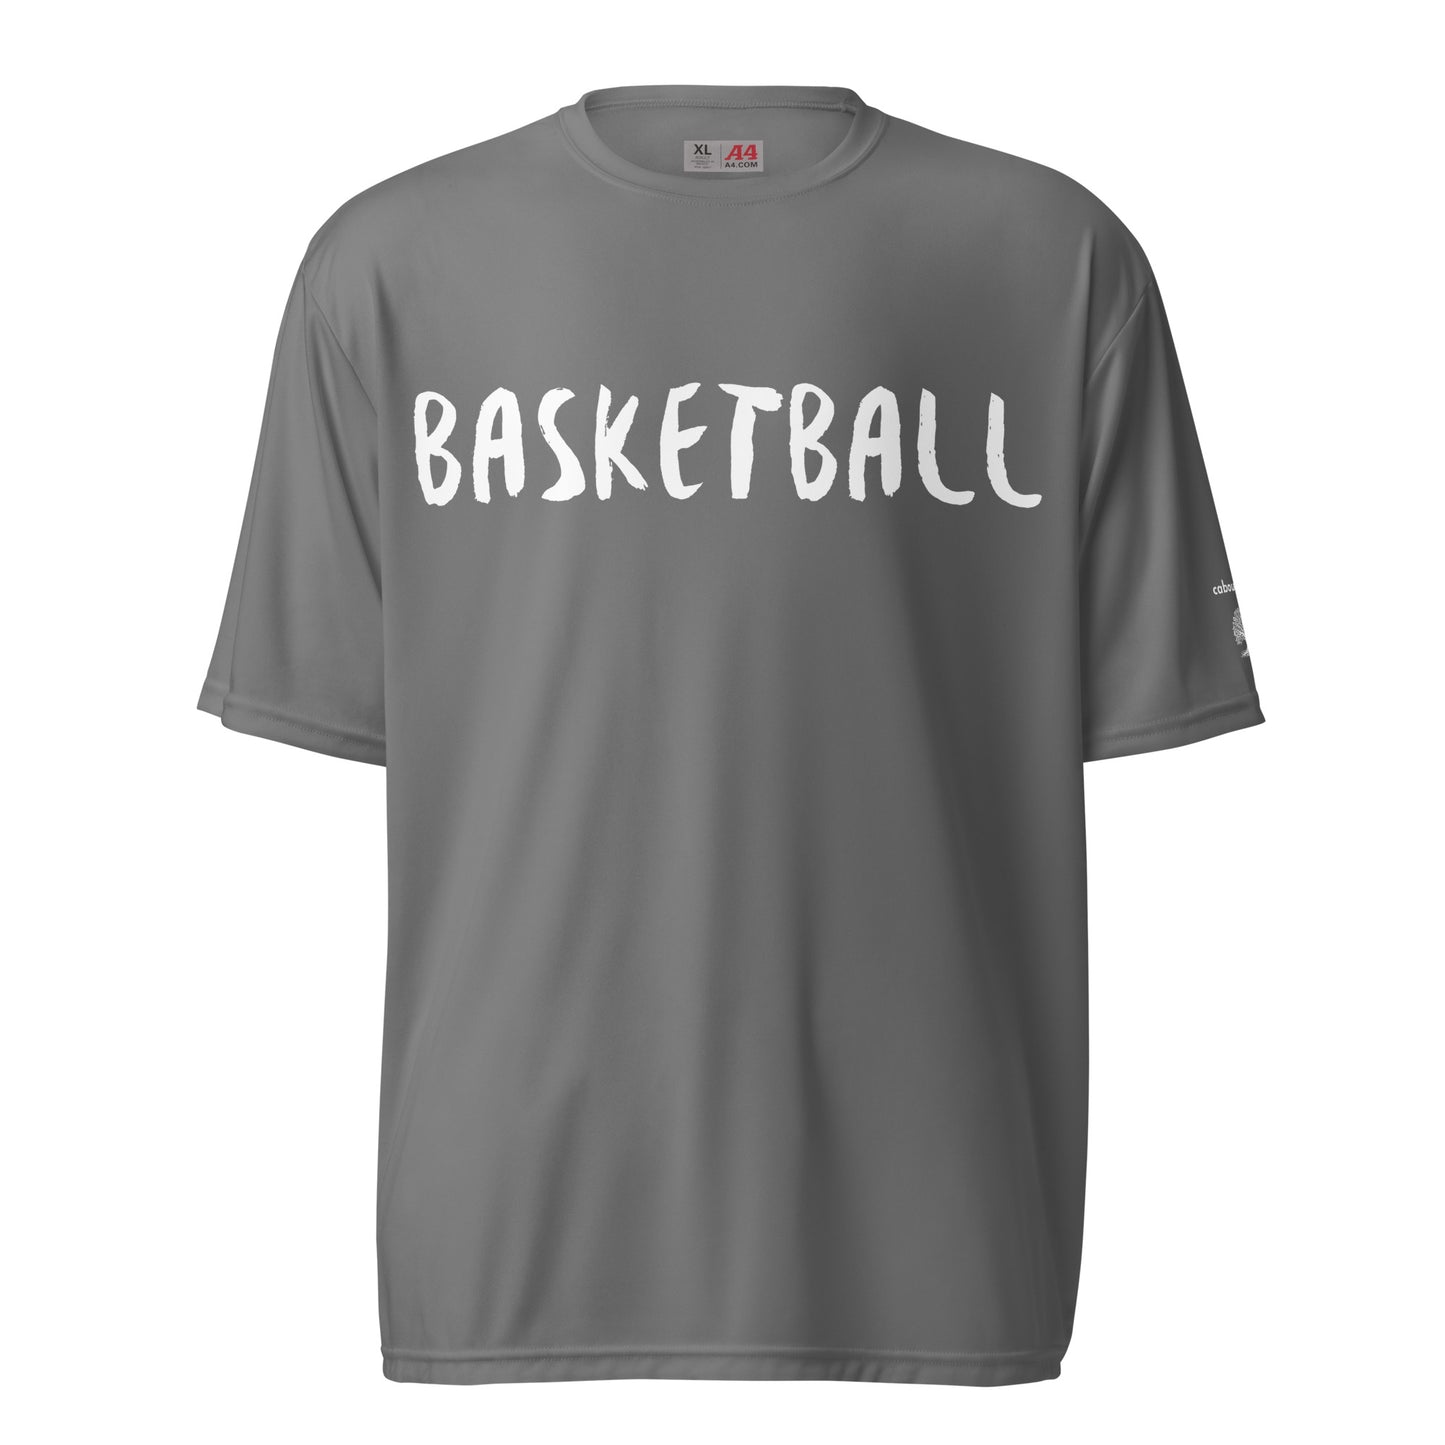 Unisex performance crew neck t-shirt - Basketball